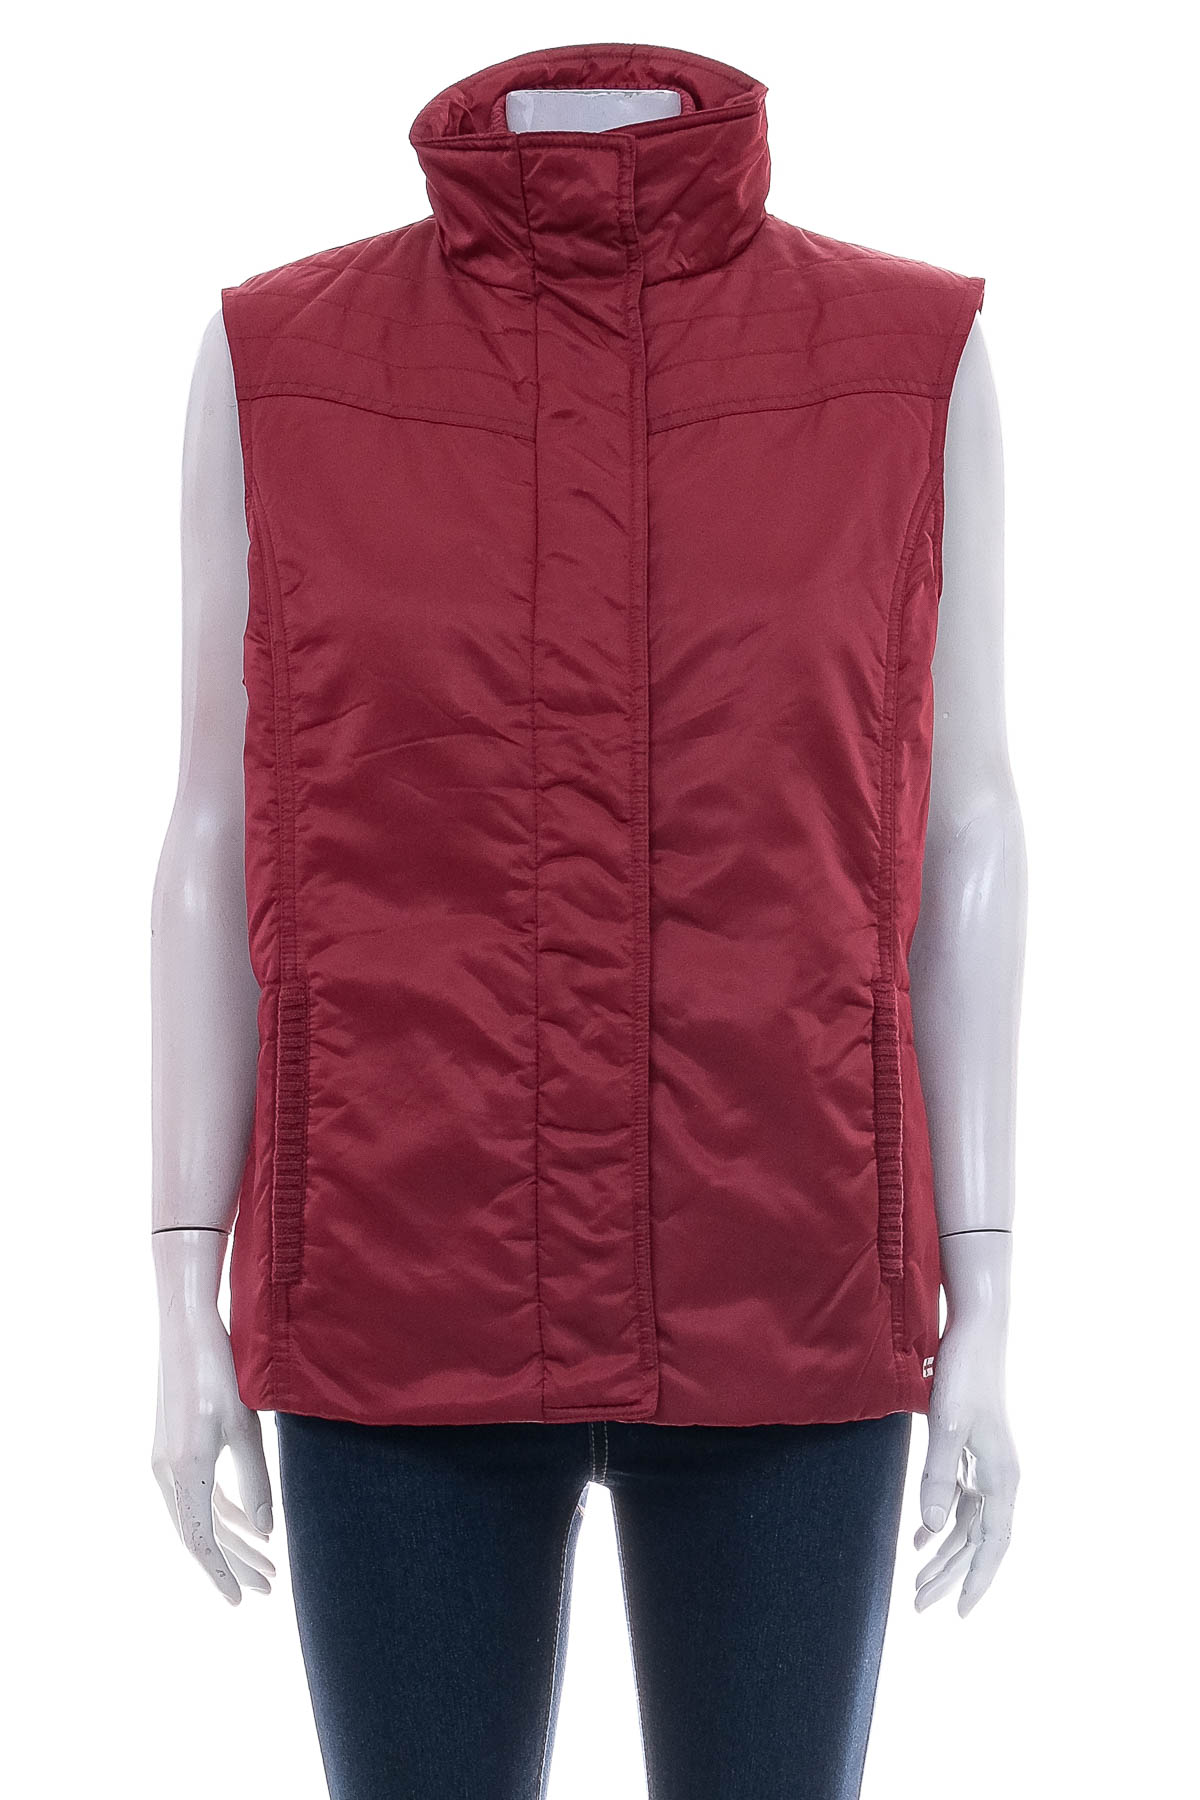 Women's vest - Greystone - 0